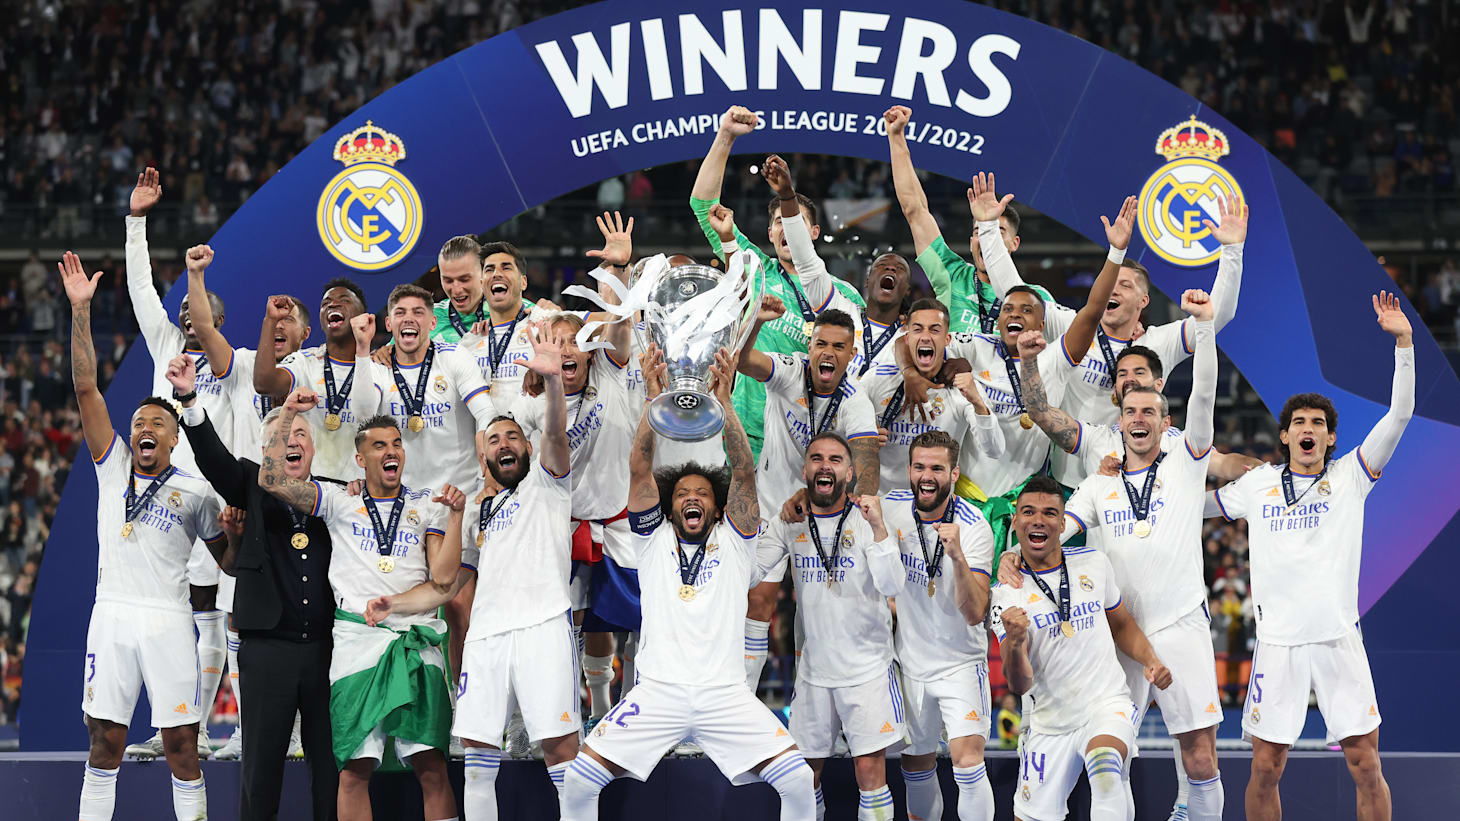 Uefa Champions League 2018/19 groups and award winners - AS USA